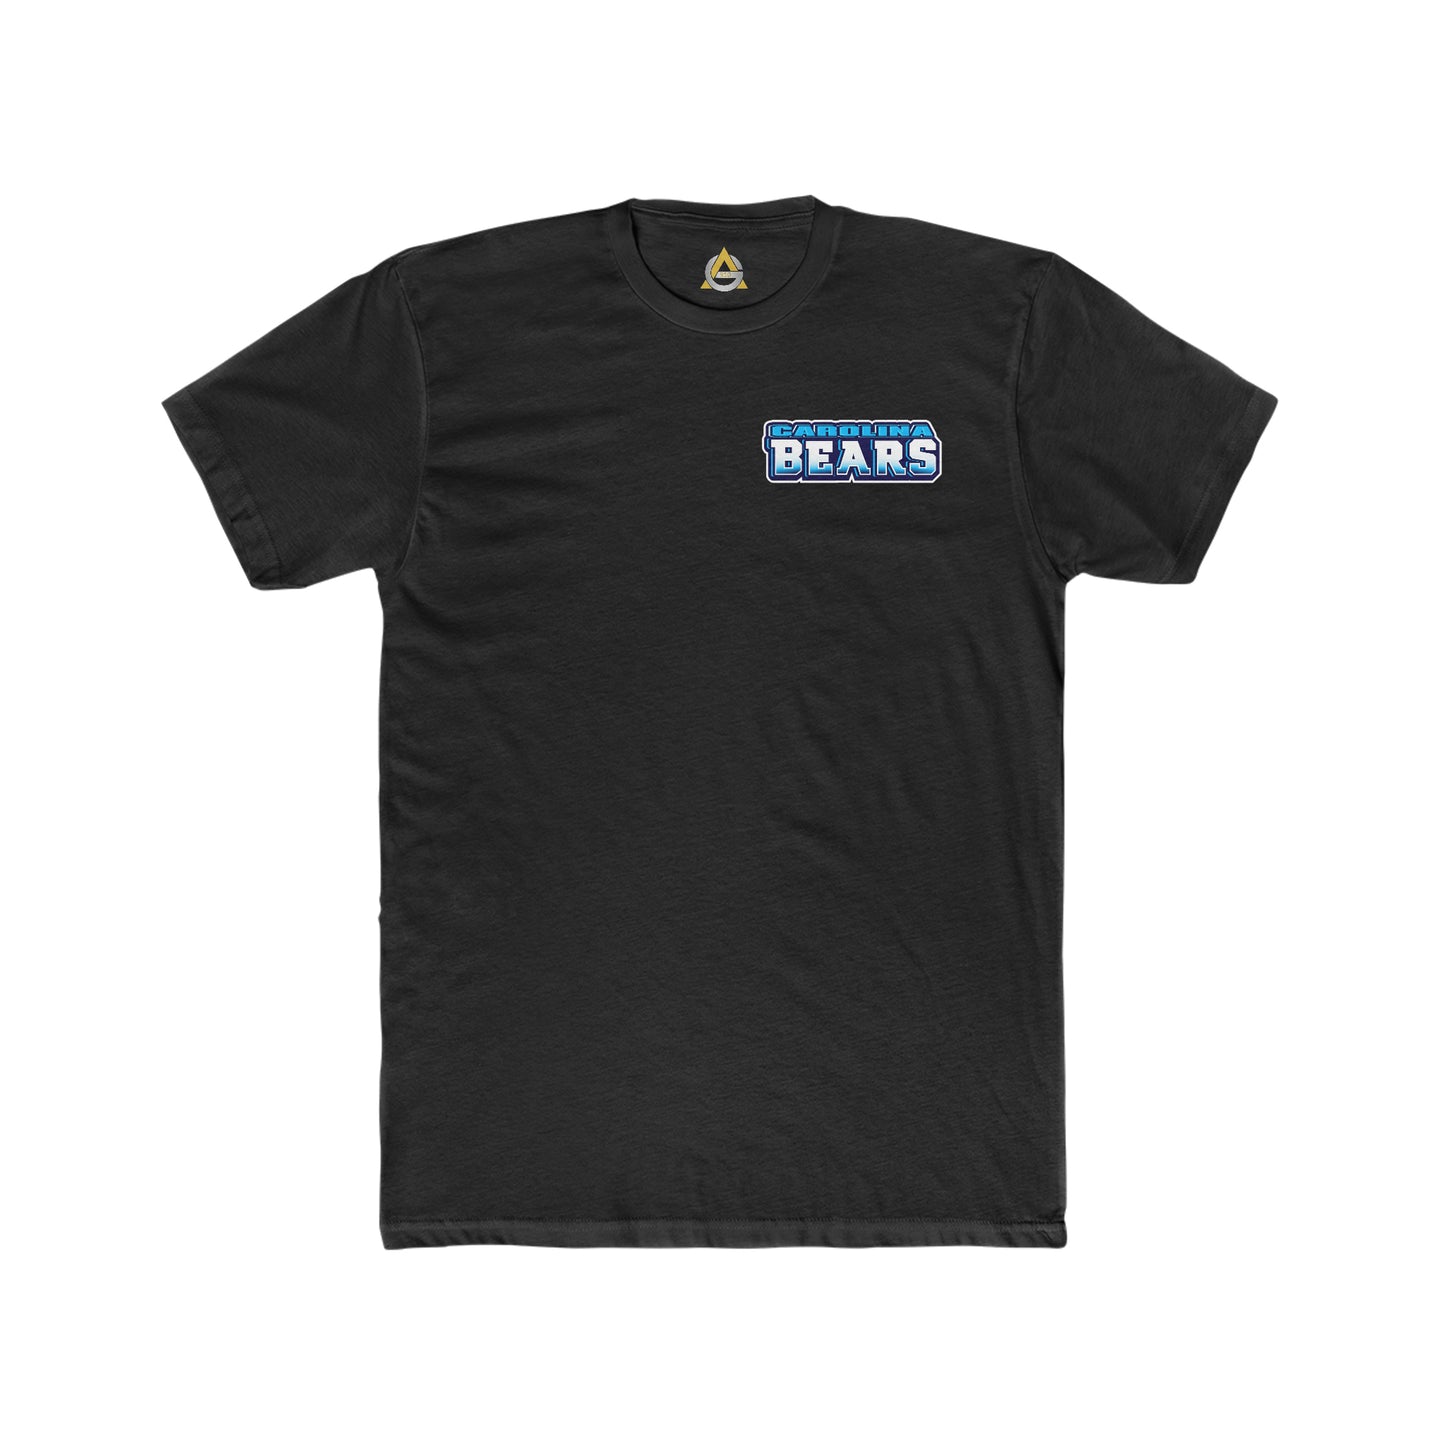 Bears Family Only T Shirt